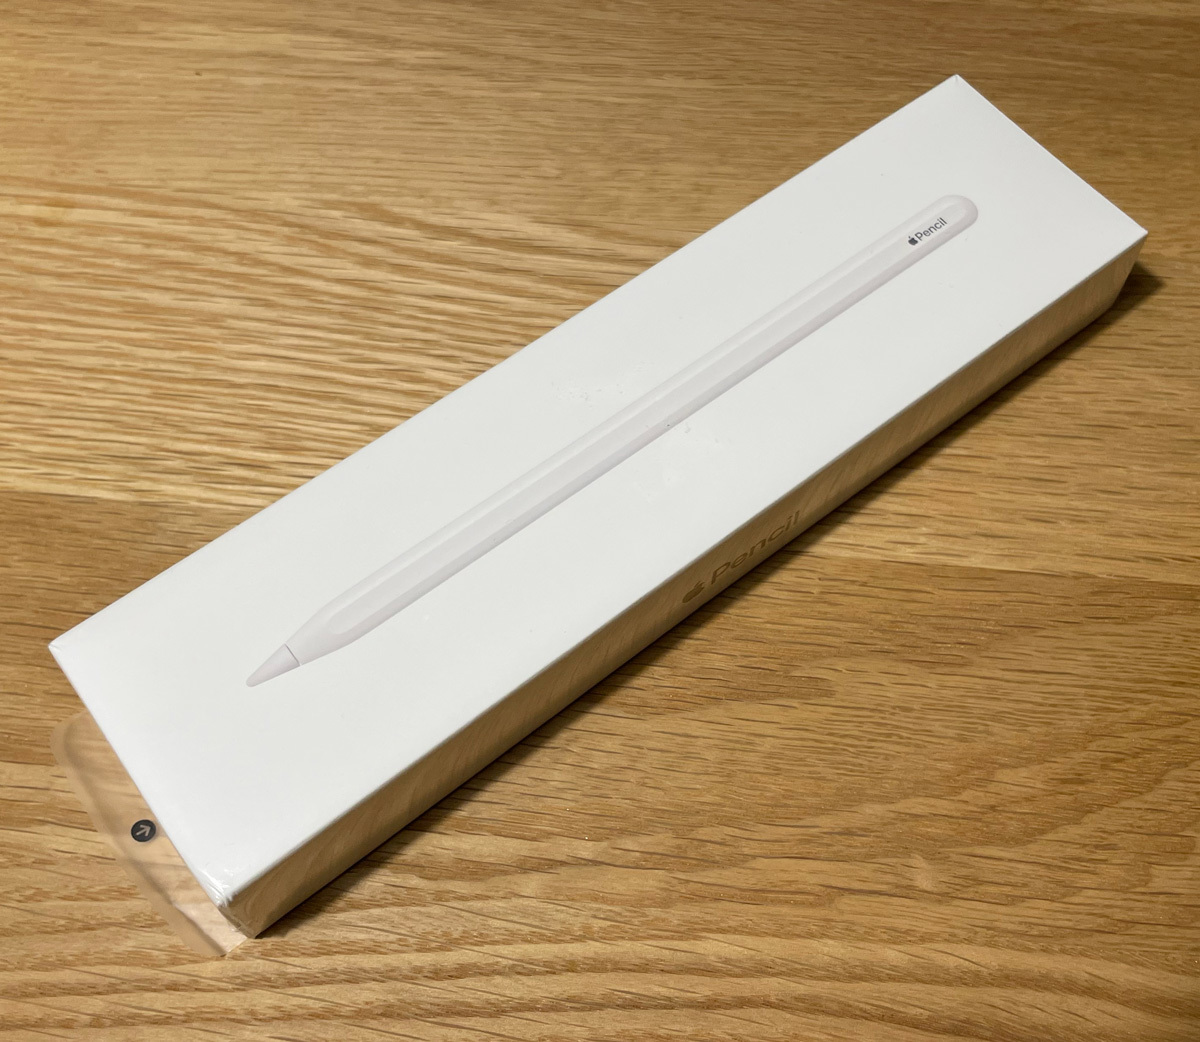 低価正規品】 Apple - 新品未開封 Apple pencil 第2世代 正規品の通販